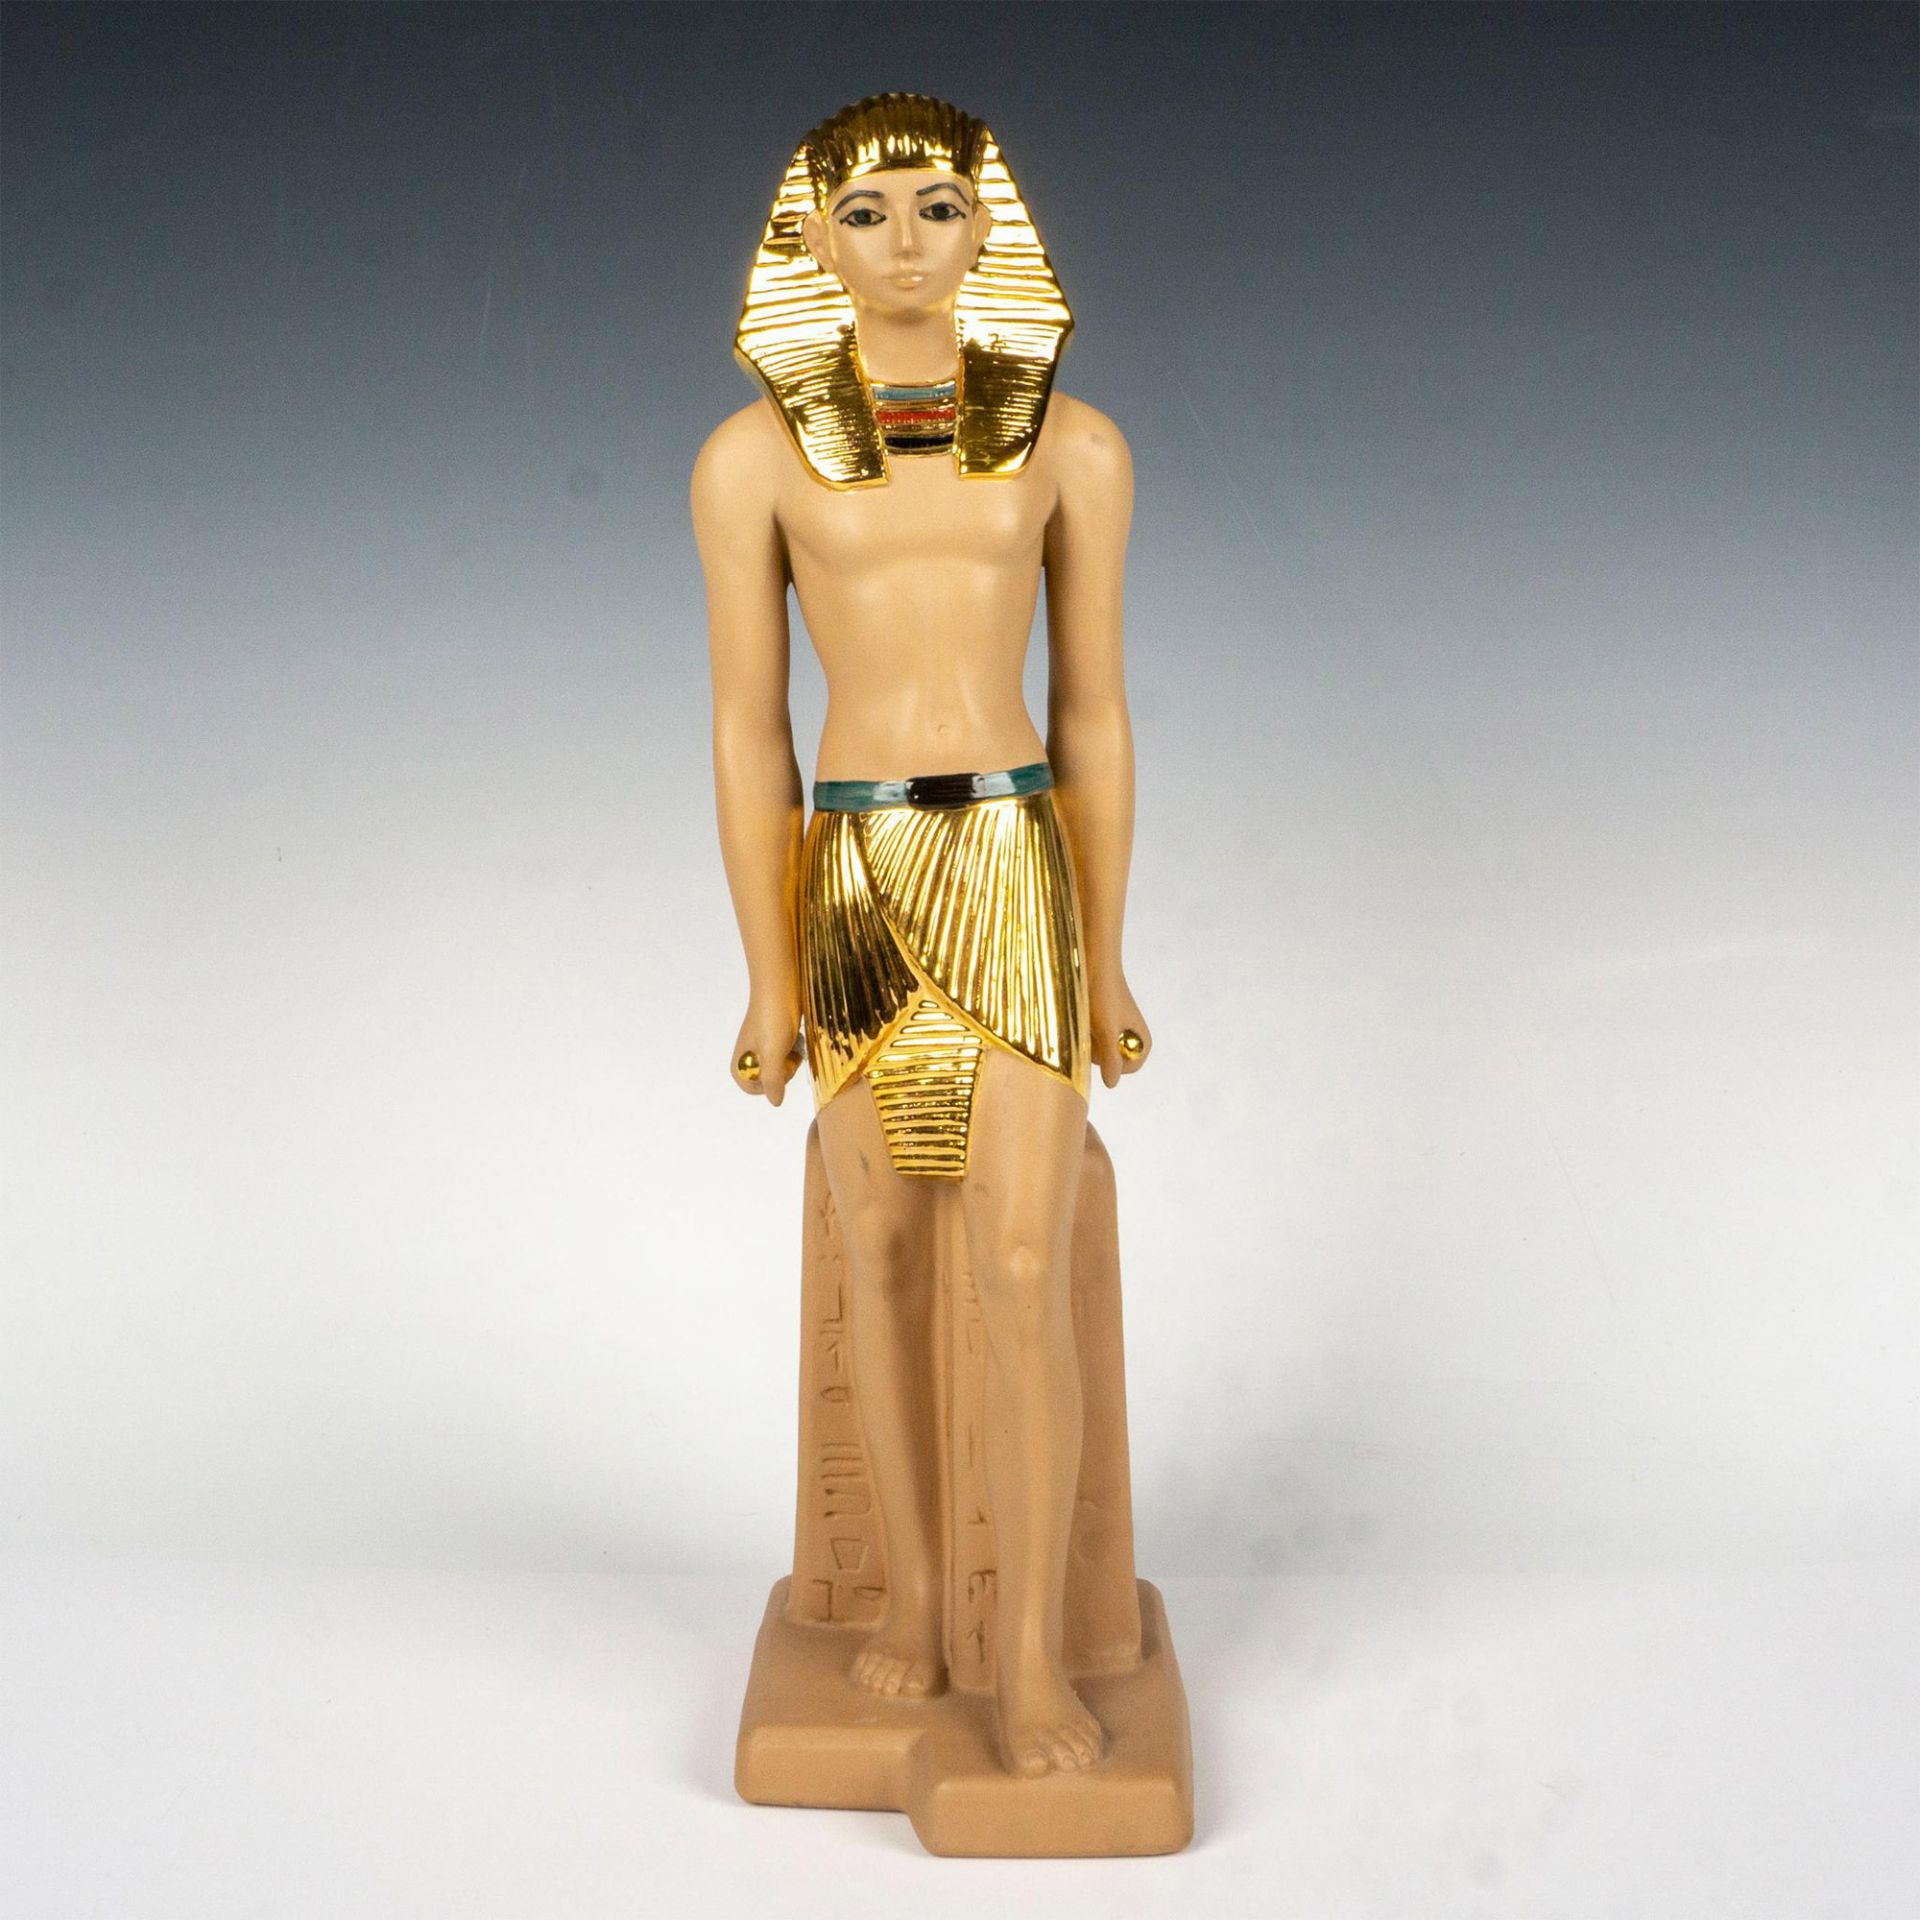 Nadal Porcelain Egyptian Male Figurine